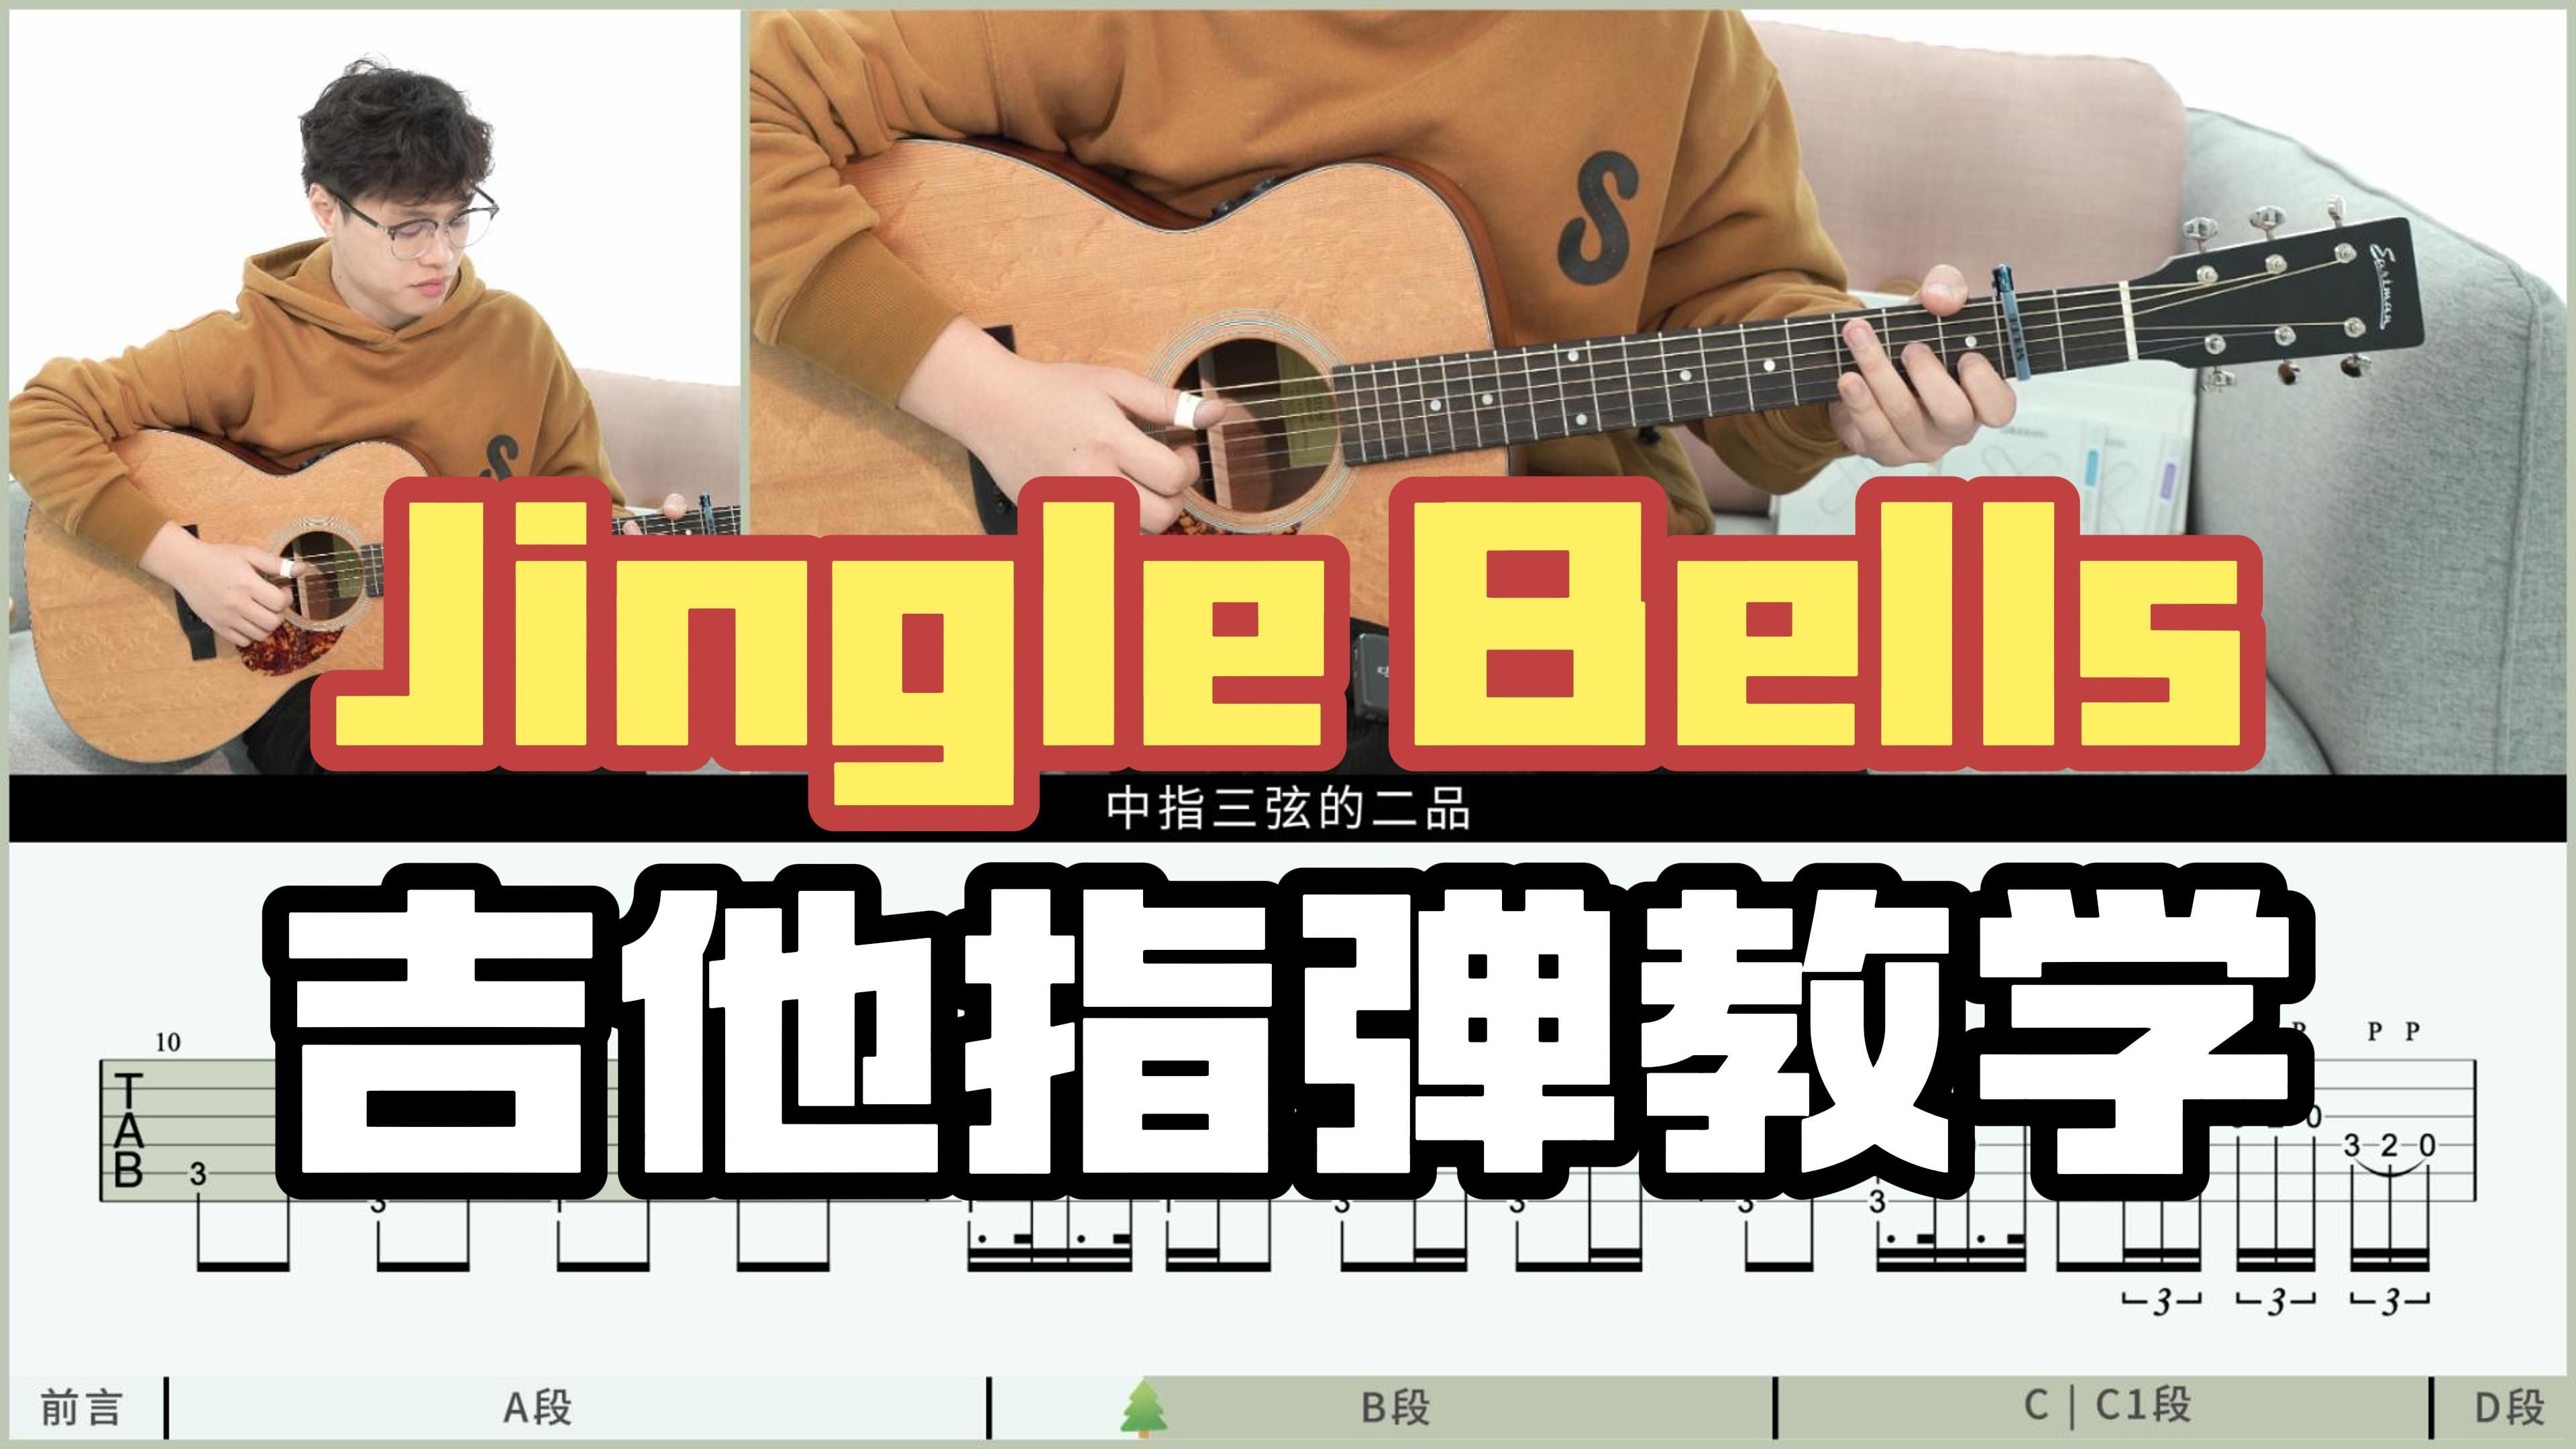 Jingle Bells吉他谱原版C调指弹 - 圣诞颂歌 - 欢快雪橇铃声 | 吉他湾